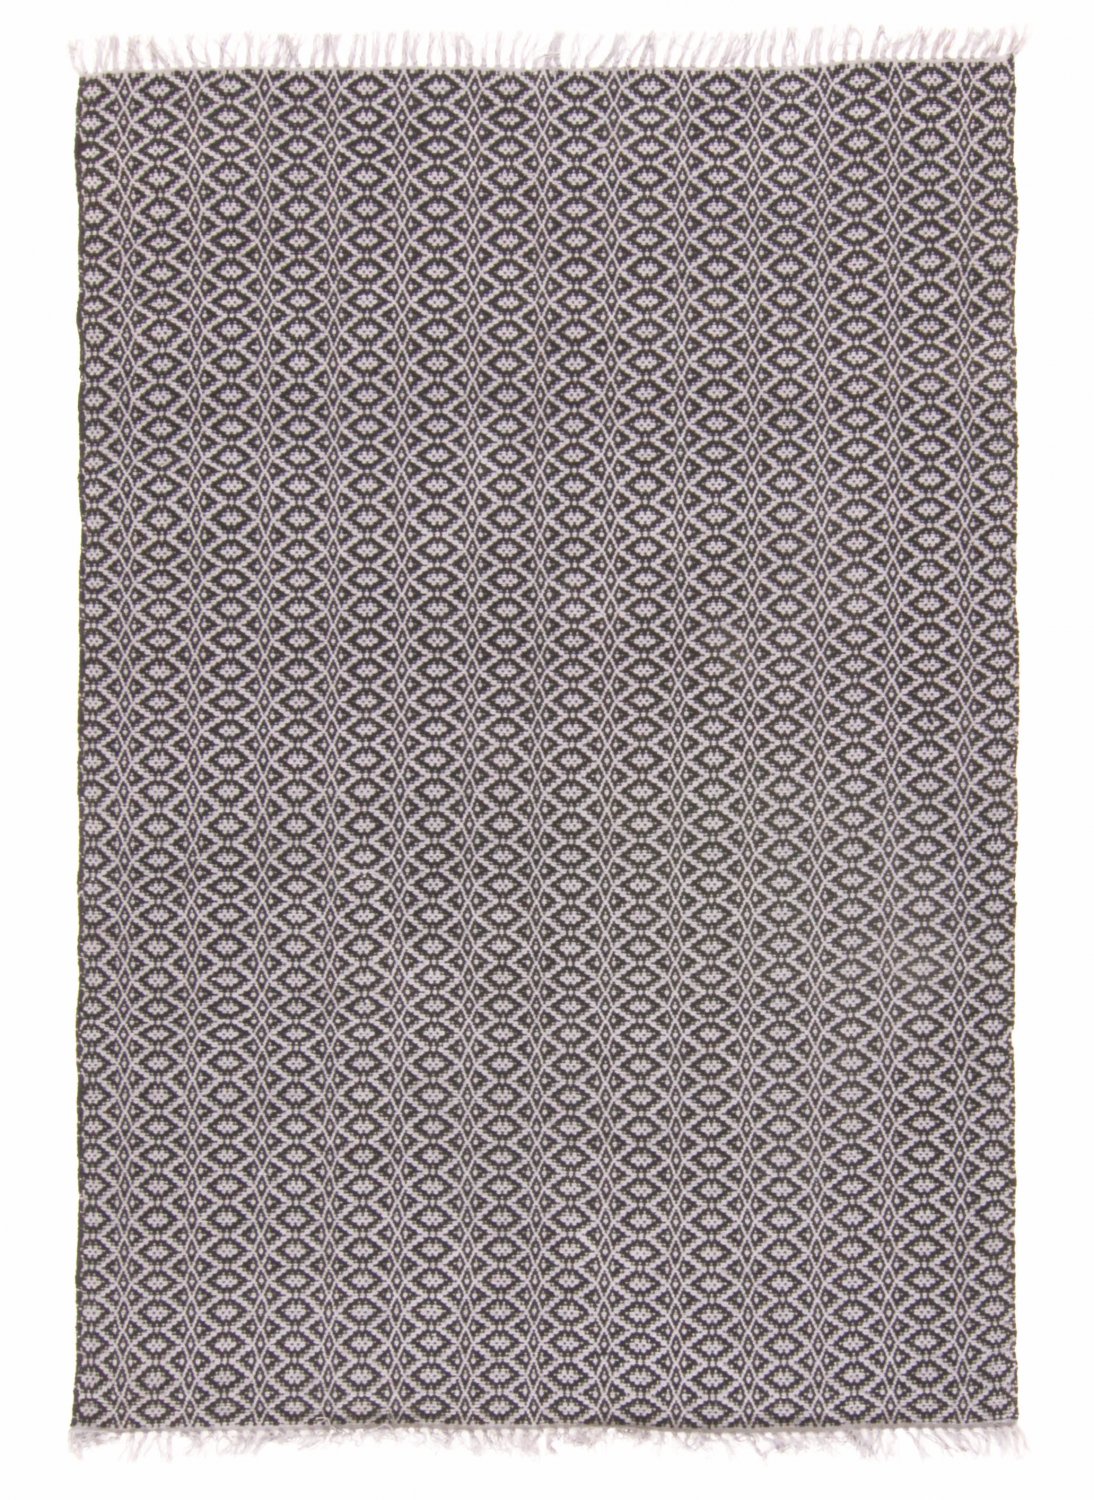 Kludetæppe - Lykke (grå/sort-grå)